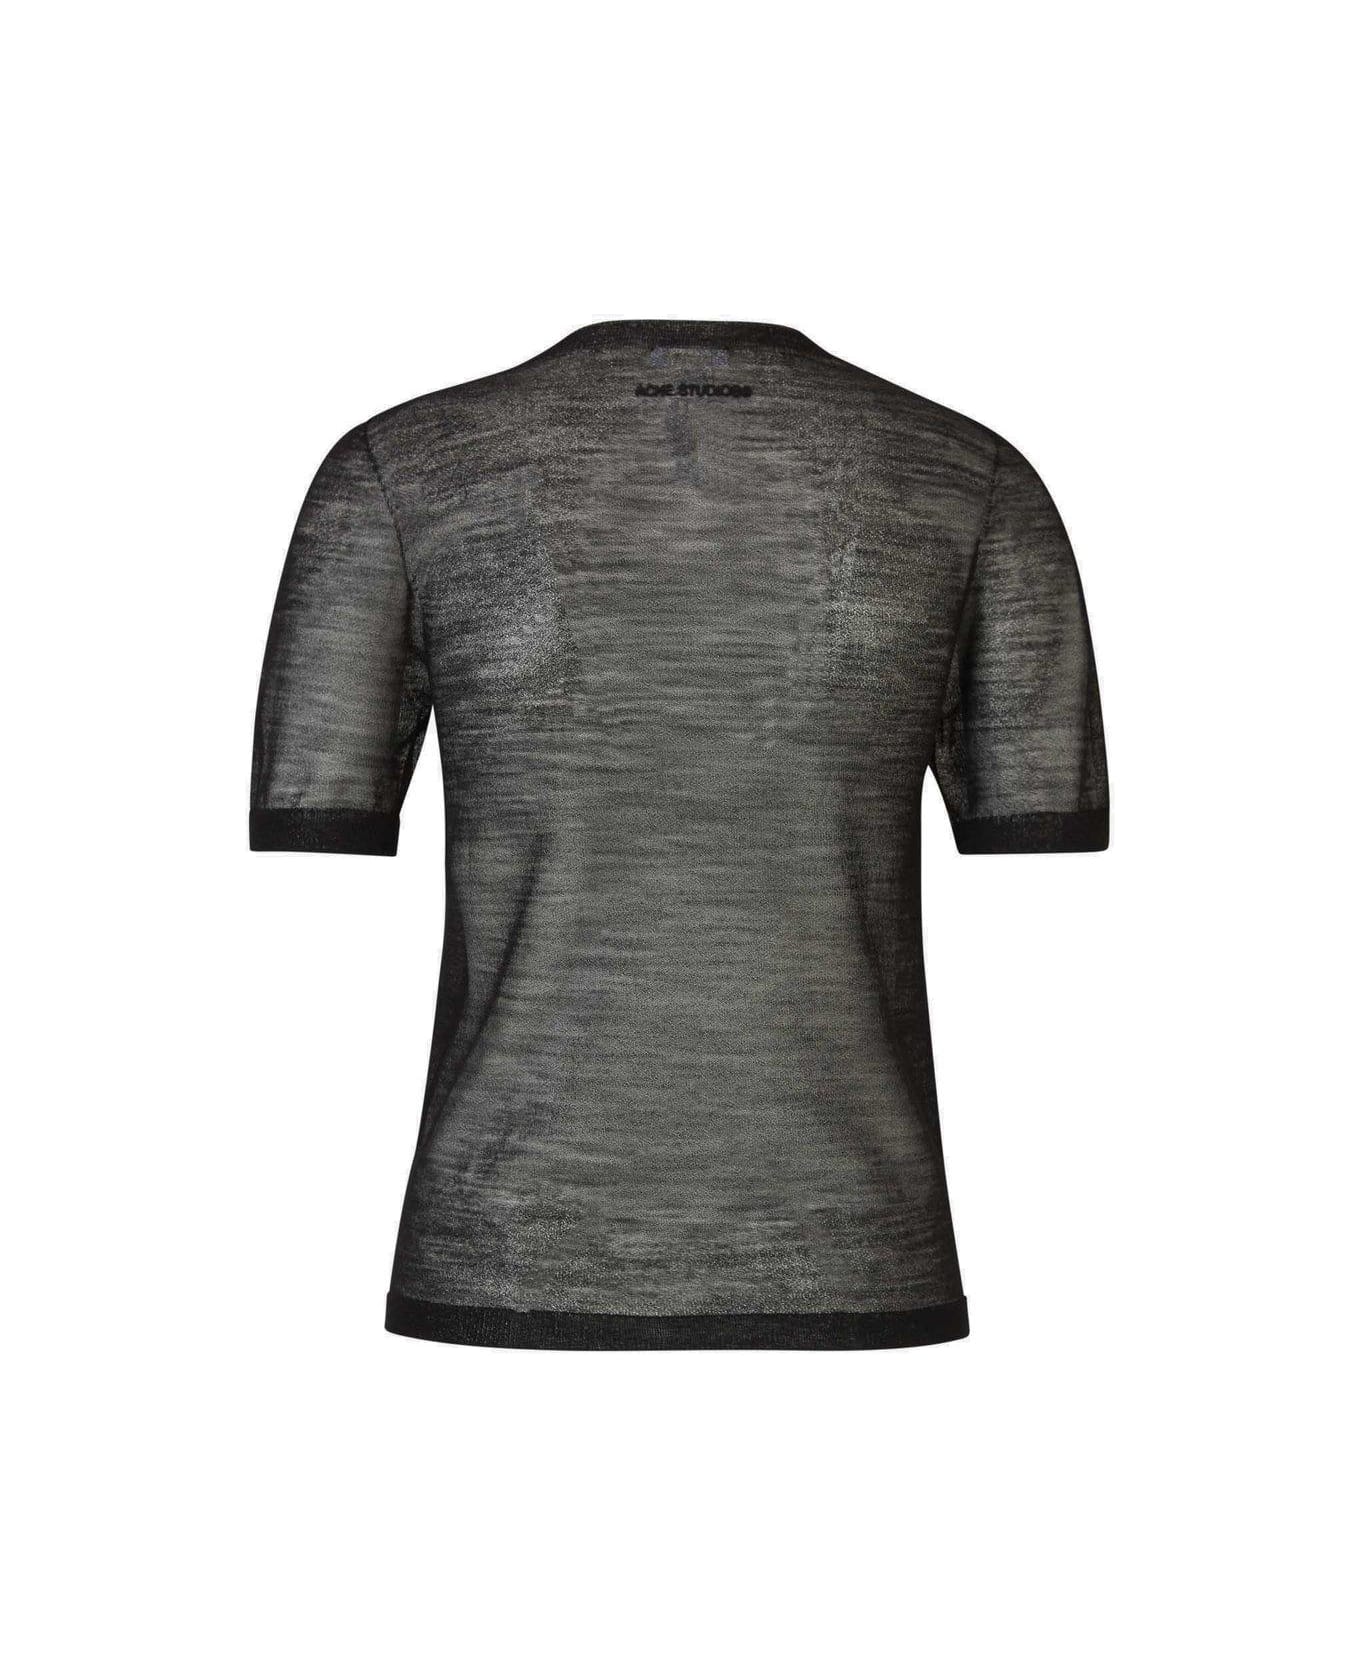 Acne Studios Sheer Knitted T-shirt - BLACK Tシャツ